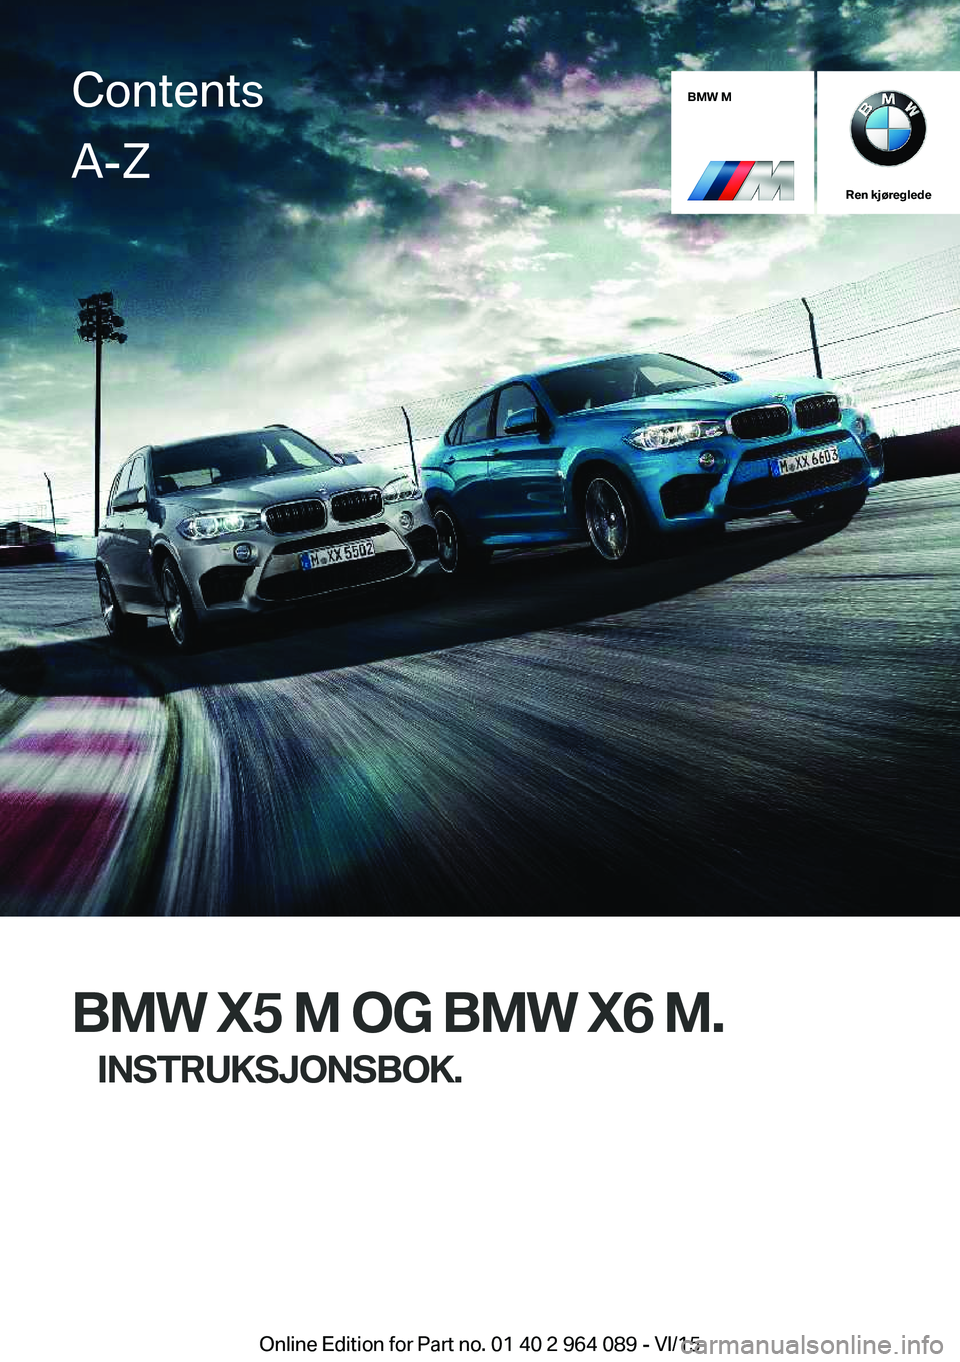 BMW X5 M 2016  InstruksjonsbØker (in Norwegian) BMW M
Ren kjøreglede
BMW X5 M OG BMW X6 M.INSTRUKSJONSBOK.
ContentsA-Z
Online Edition for Part no. 01 40 2 964 089 - VI/15   